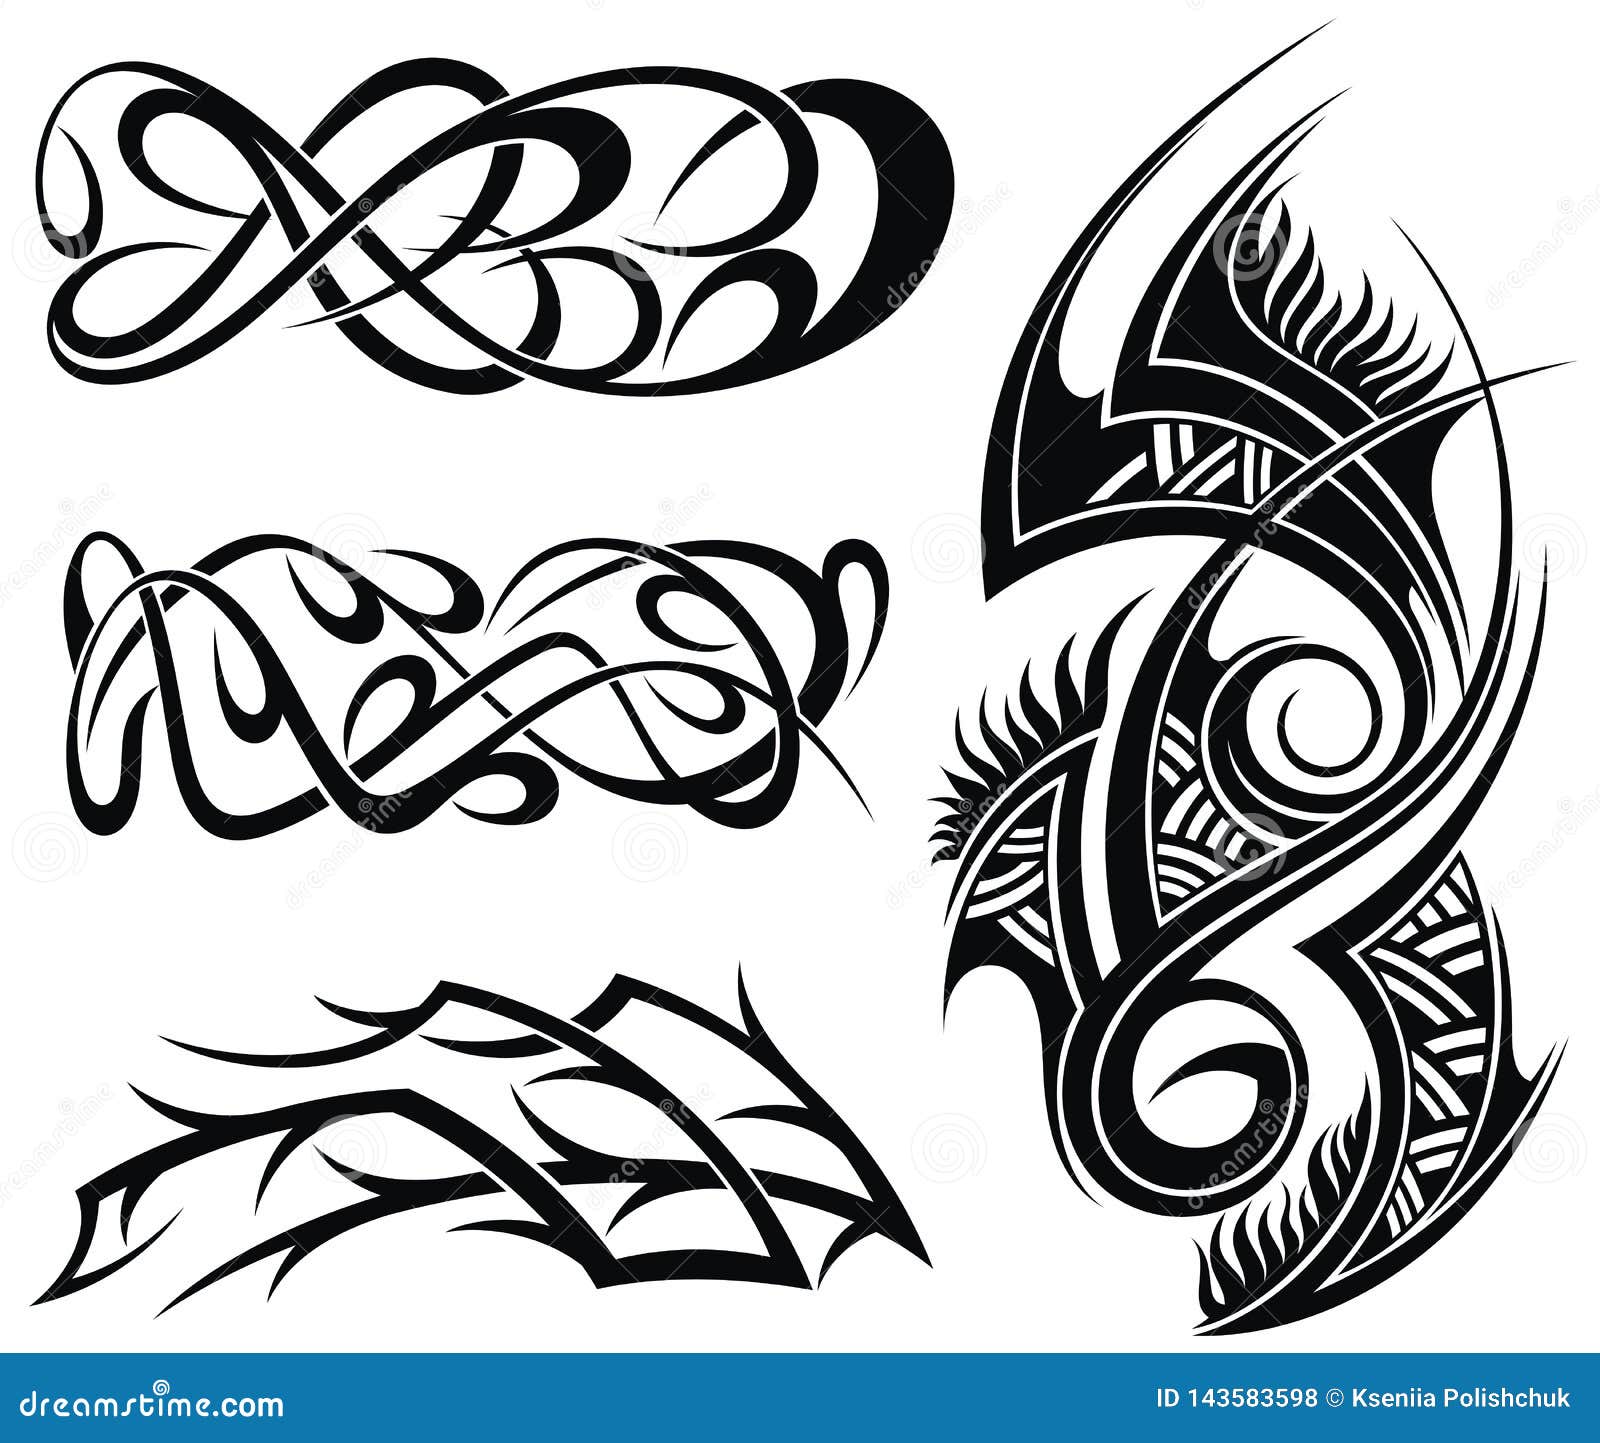 Art Deco Elements Designs Pattern, Art Tribal Tattoo Stock Vector - Illustration of emblem, element: 143583598